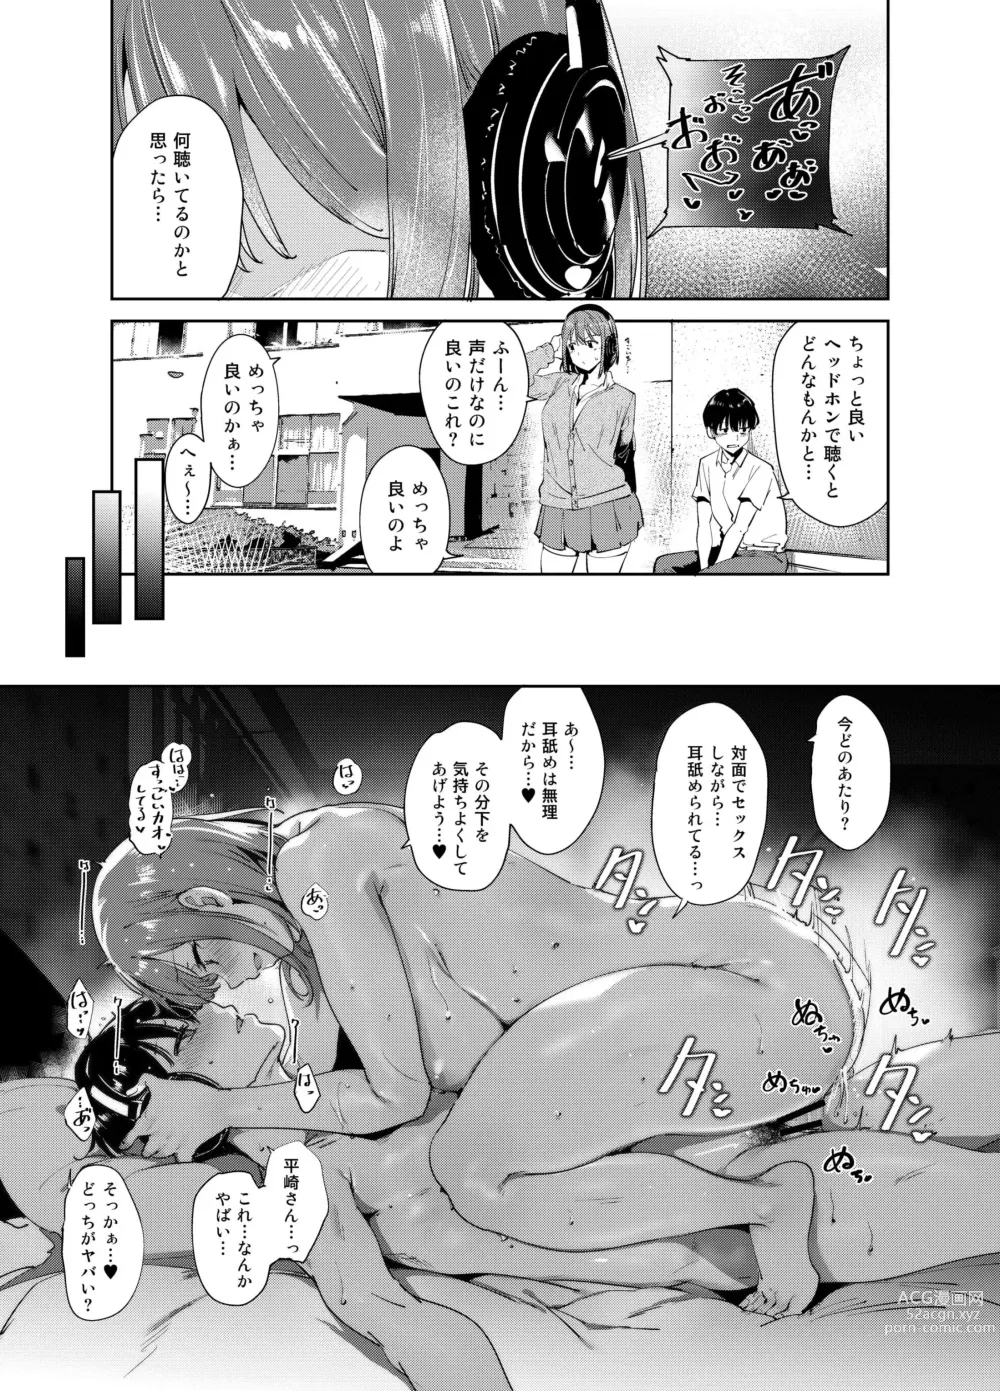 Page 55 of doujinshi Mankitsu-chu 3 Onsen Hen